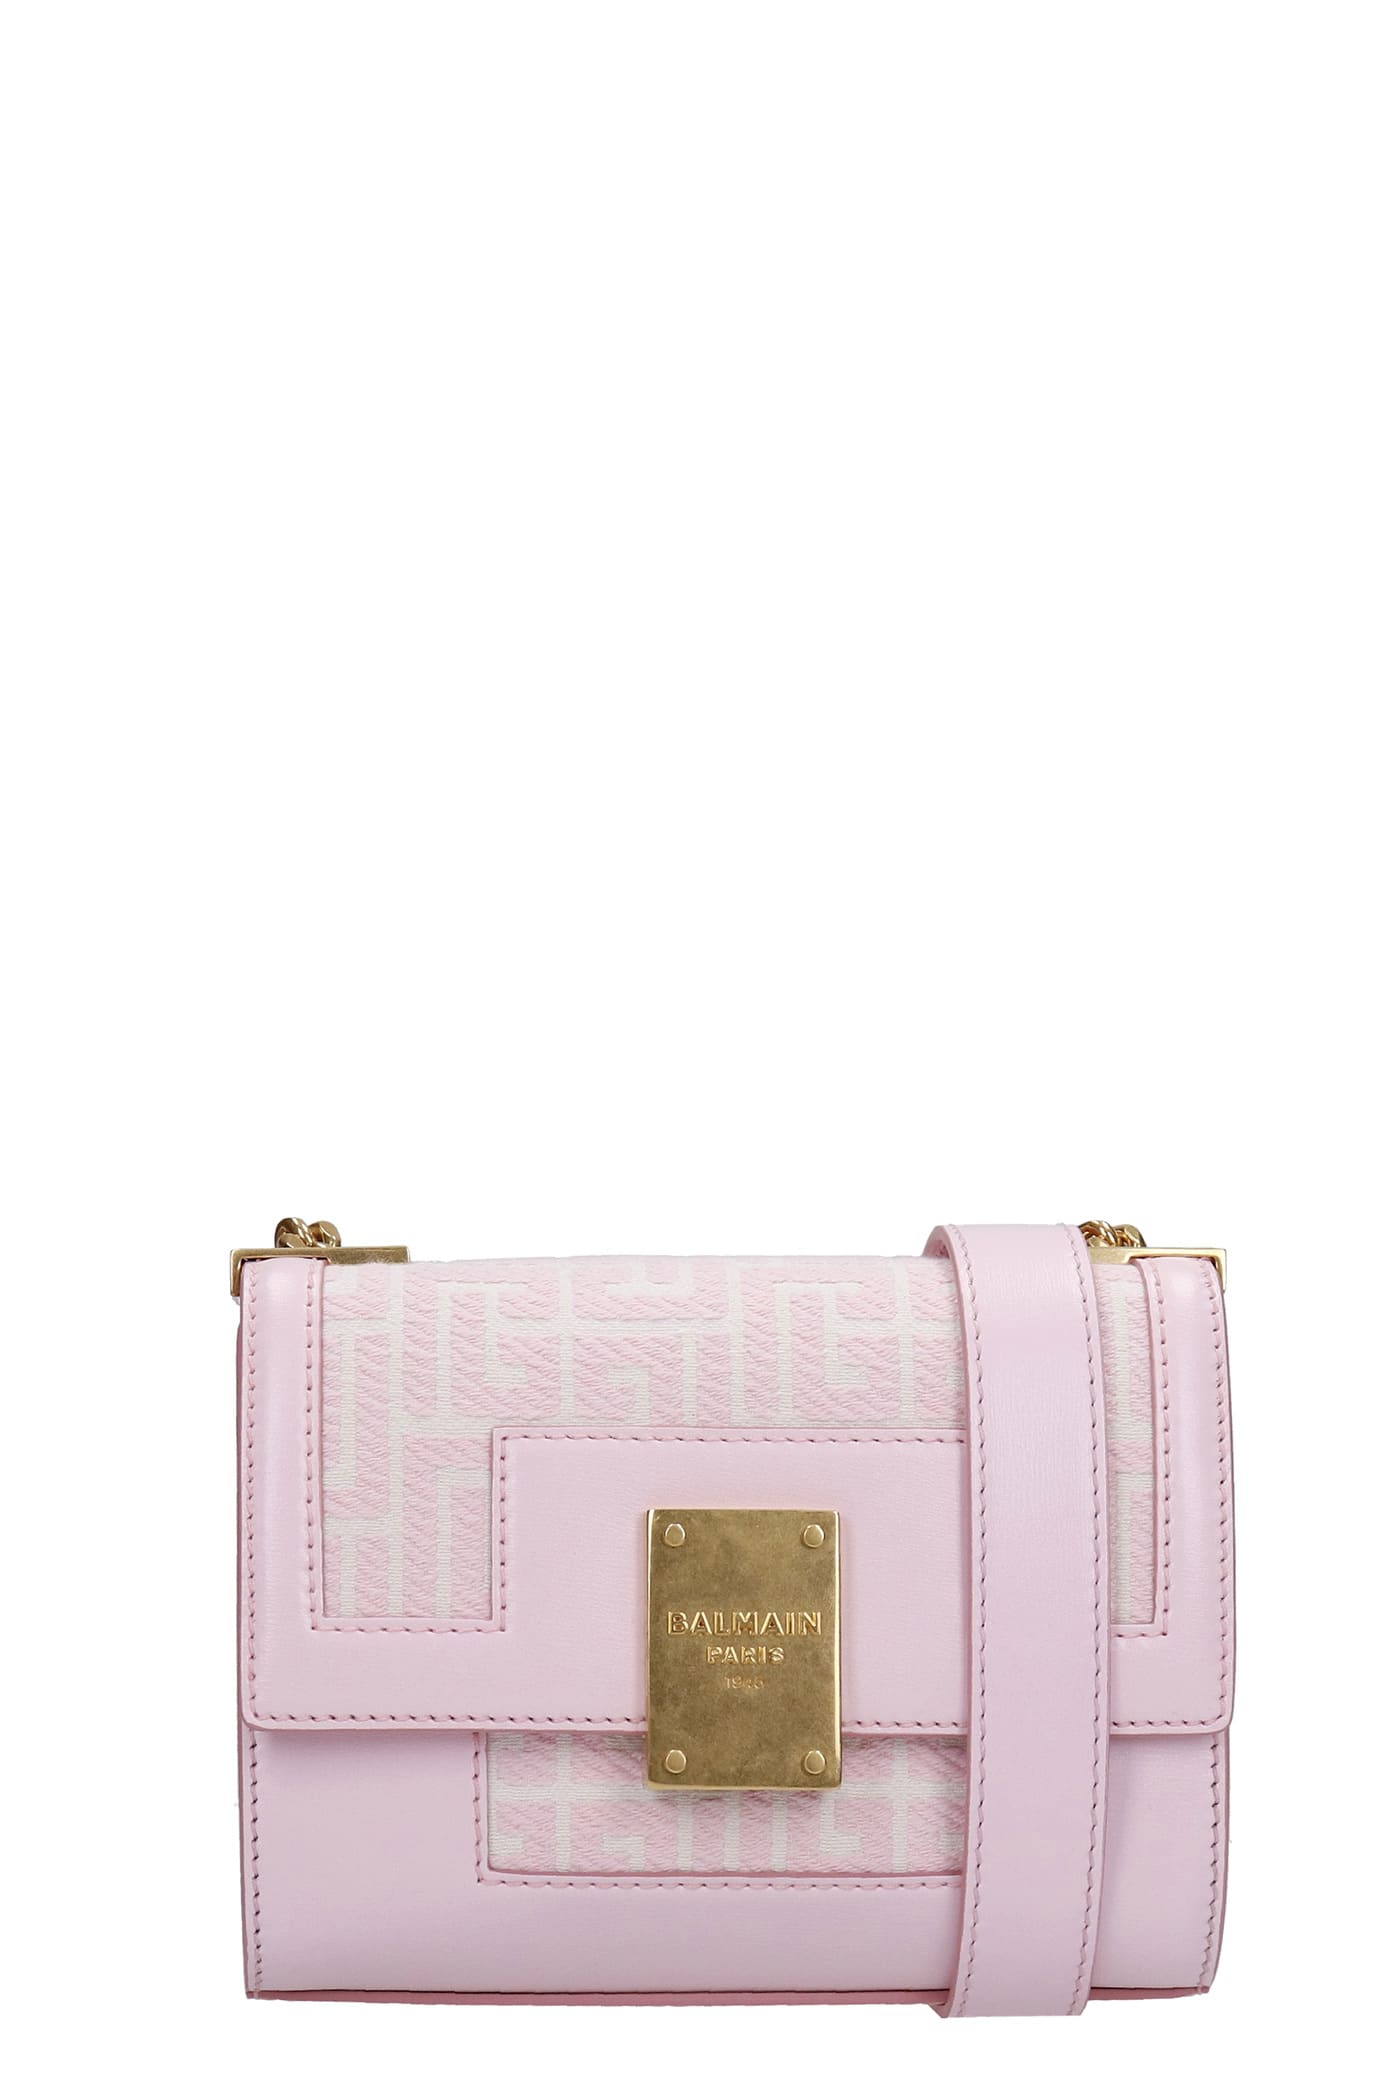 Balmain Shoulder Bag In Rose-pink Leather